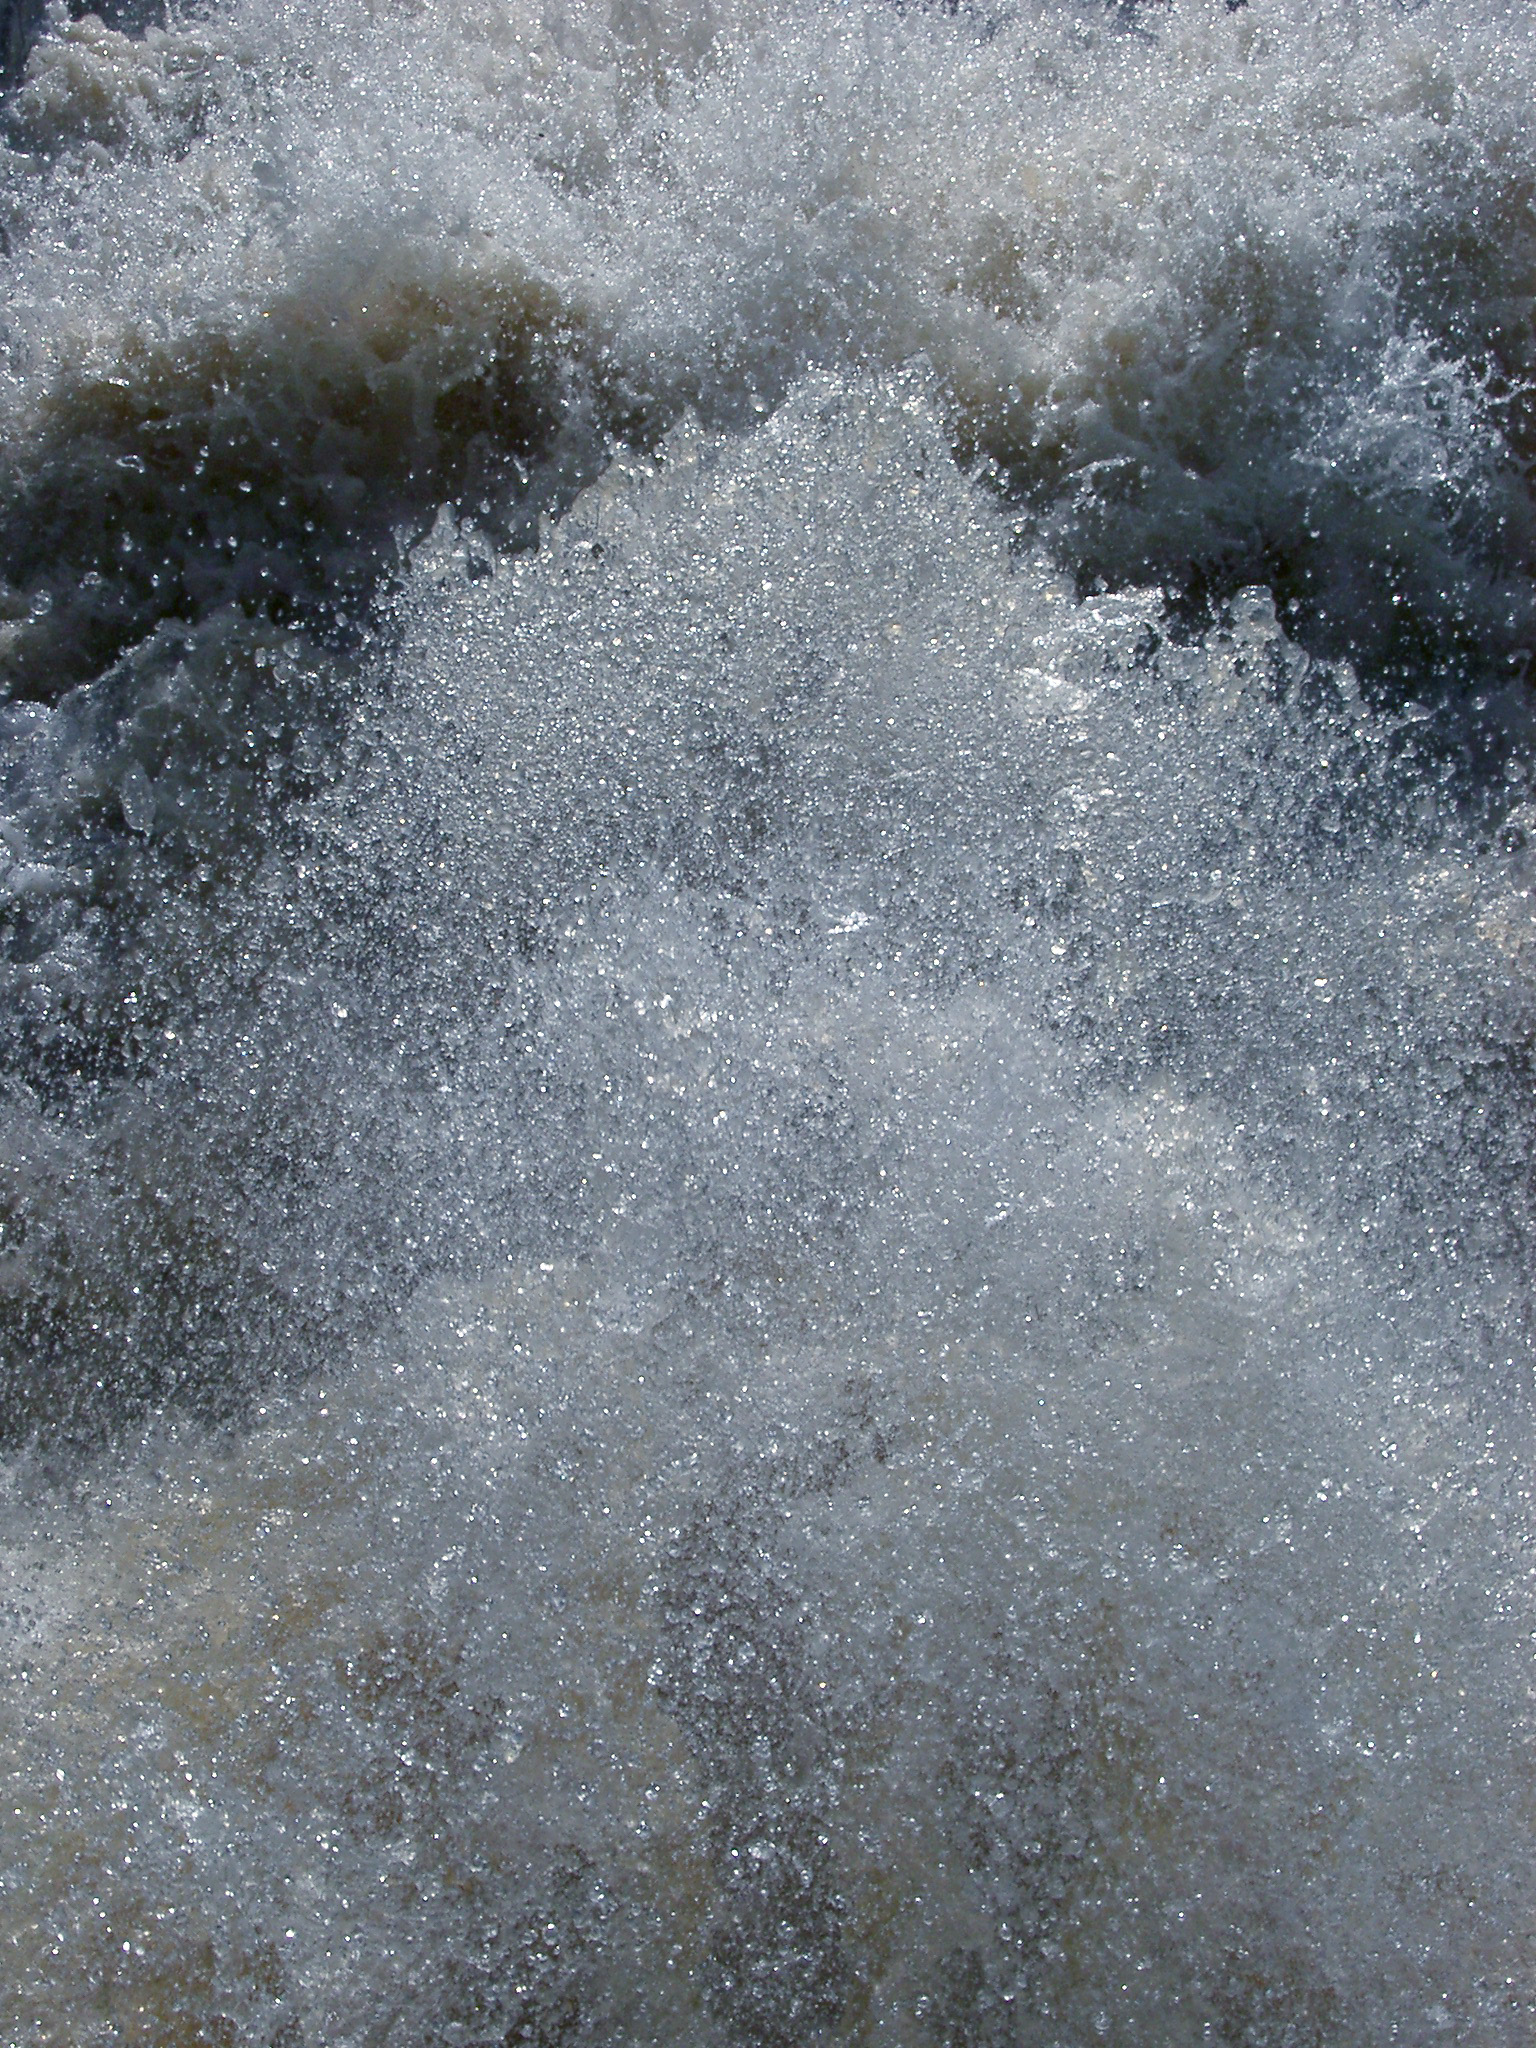 Free image of foaming water